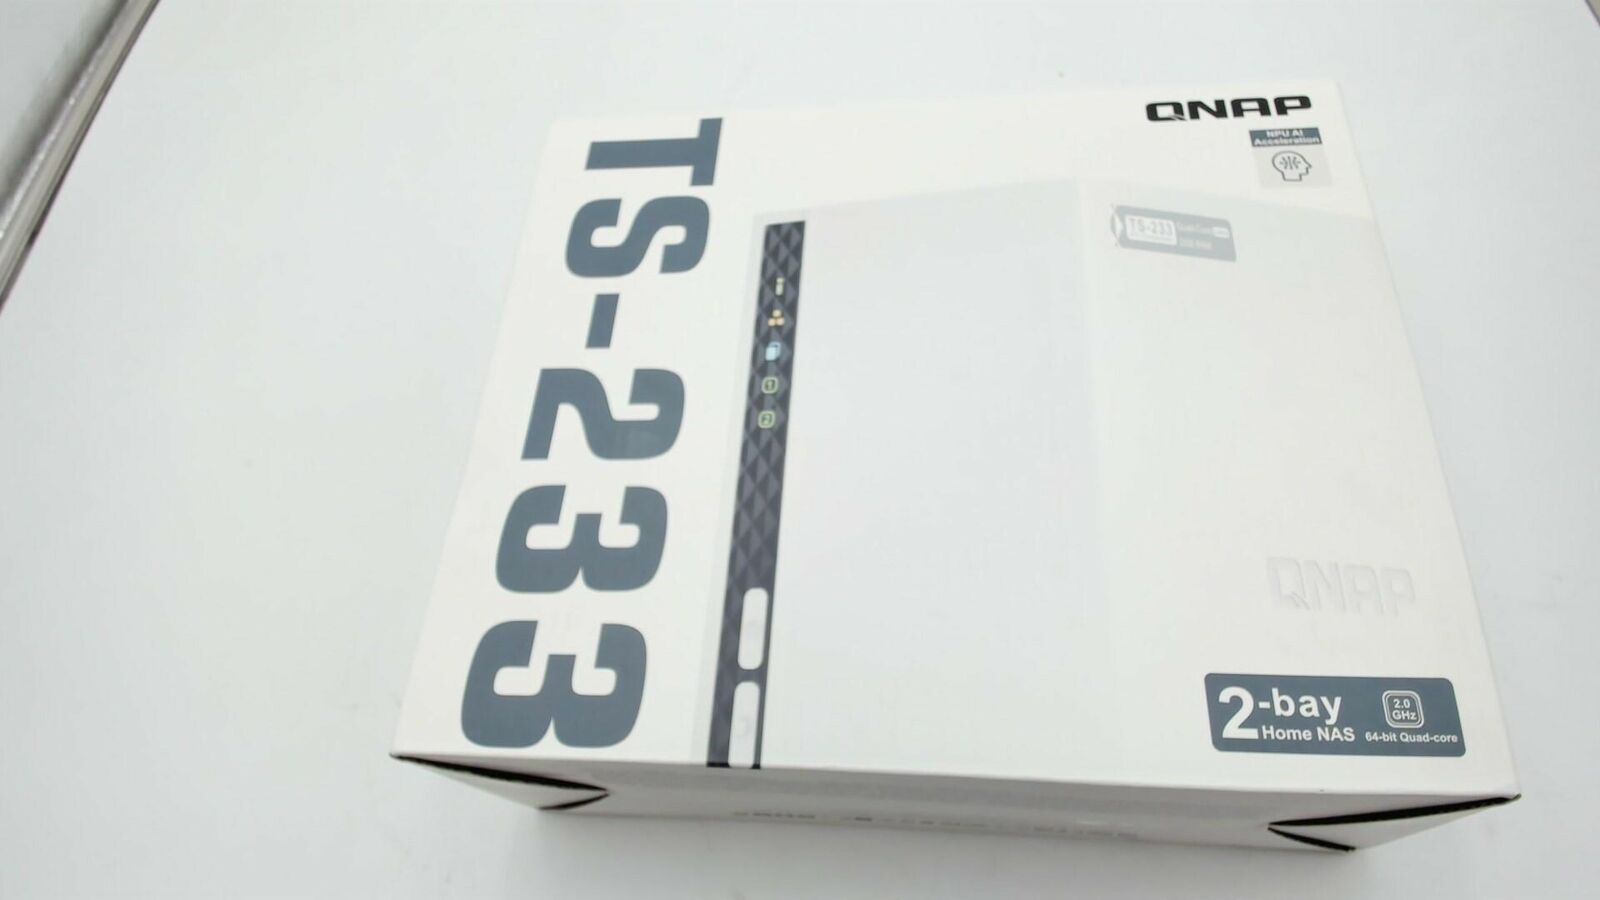 QNAP TS-233-US 2 Bay Affordable Desktop NAS